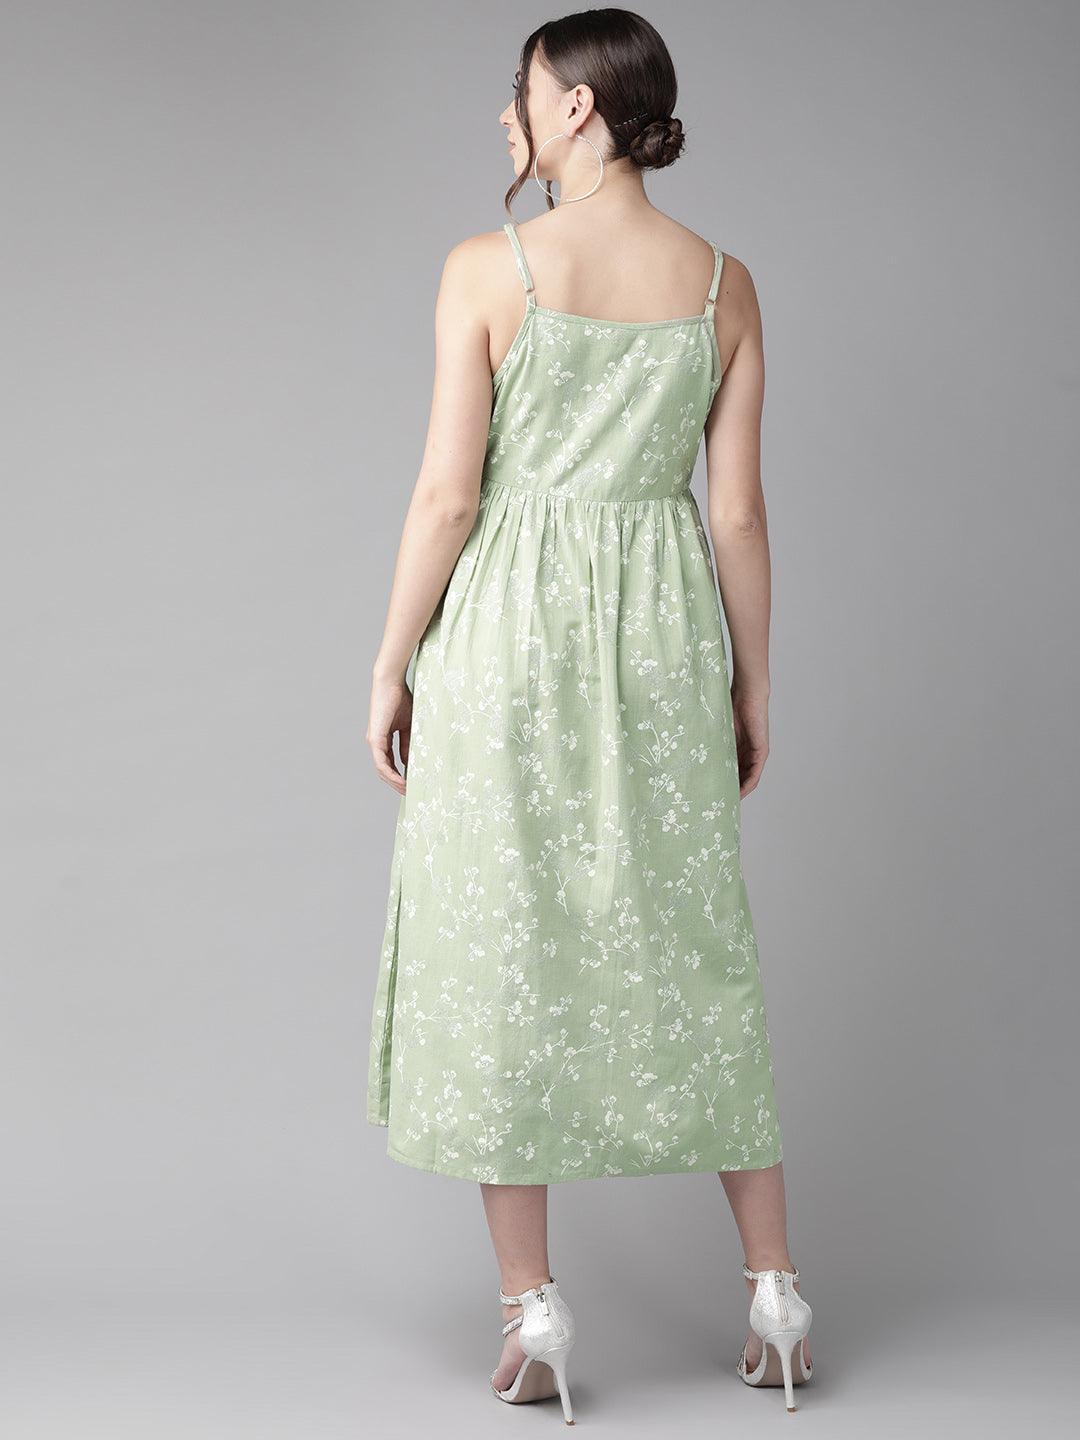 Green &amp; White Khari Print A-Line Dress (Fully Stitched) - Znxclothing